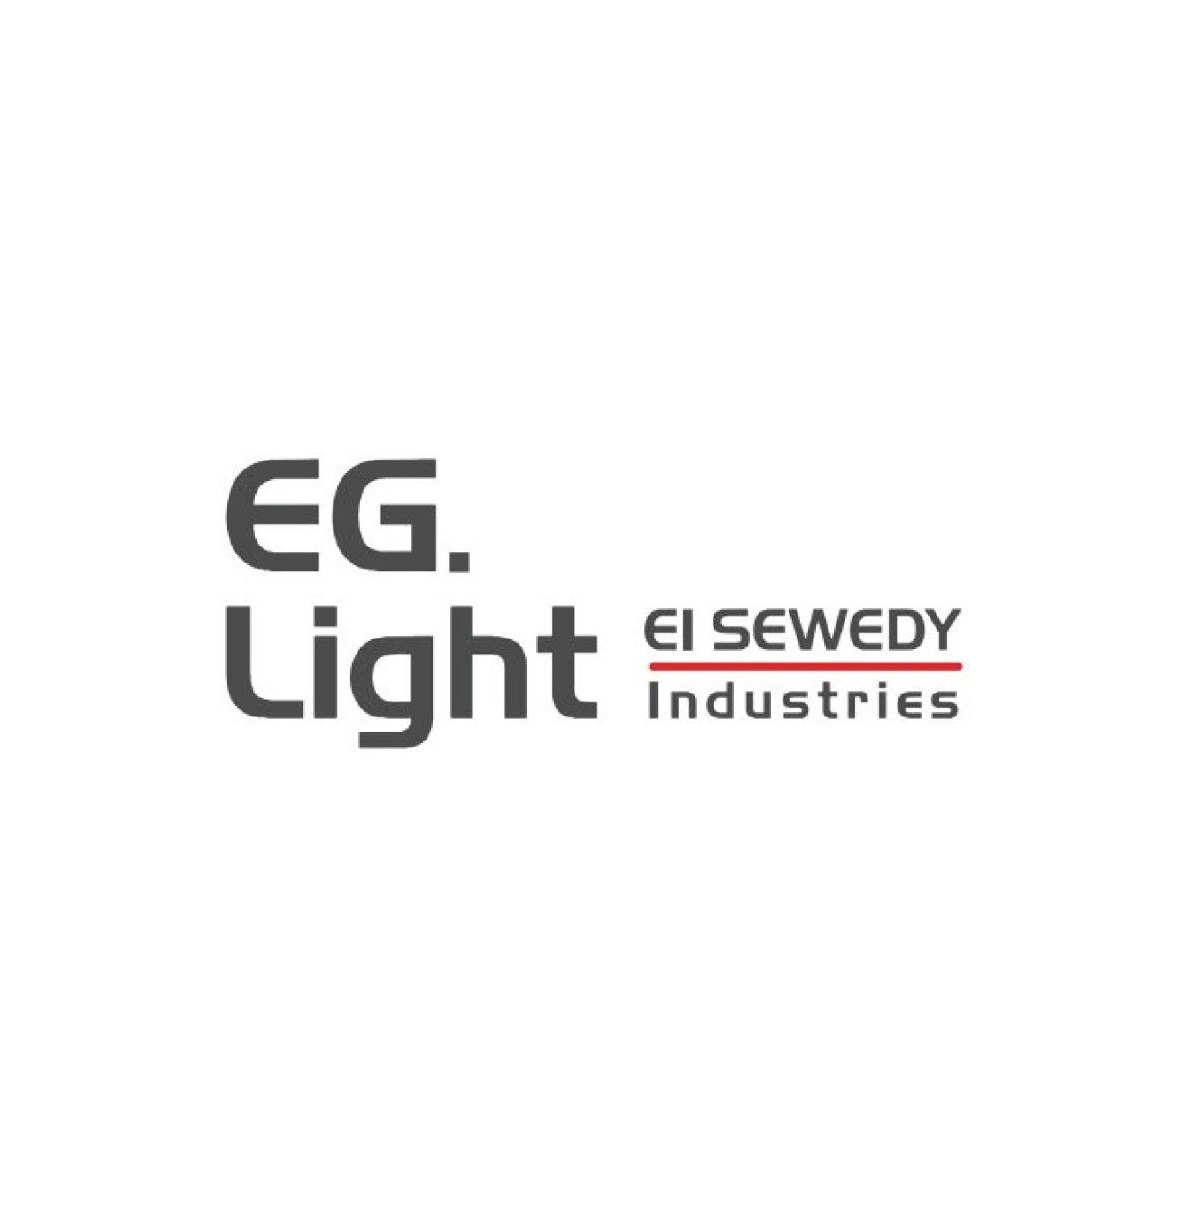 EG Light Elsewedy